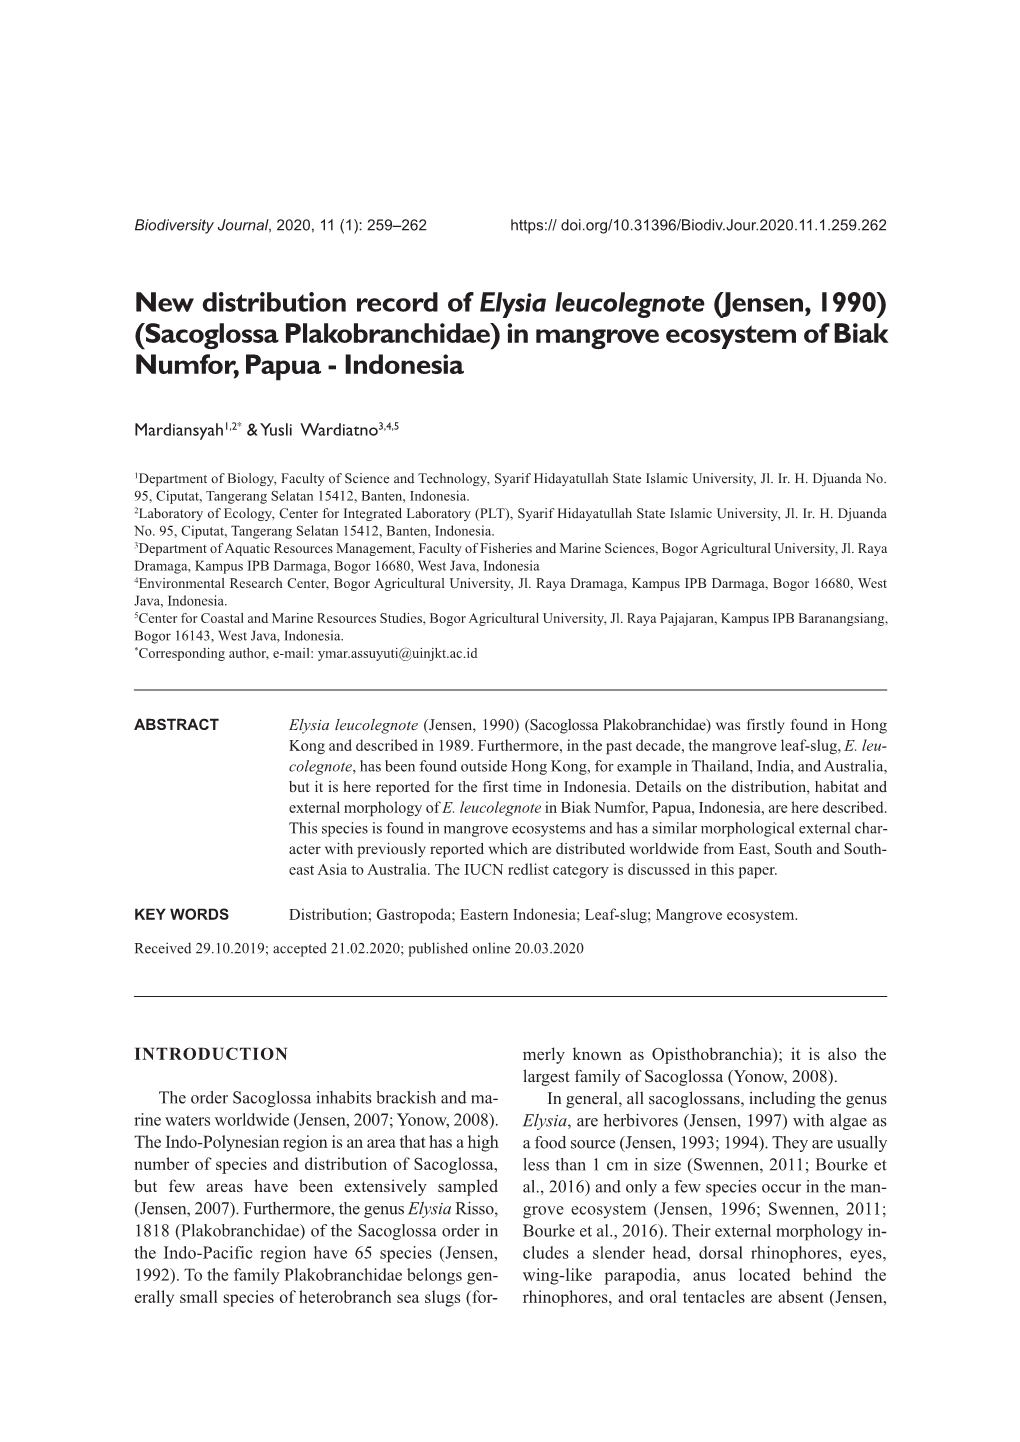 New Distribution Record of Elysia Leucolegnote (Jensen, 1990) (Sacoglossa Plakobranchidae) in Mangrove Ecosystem of Biak Numfor, Papua - Indonesia